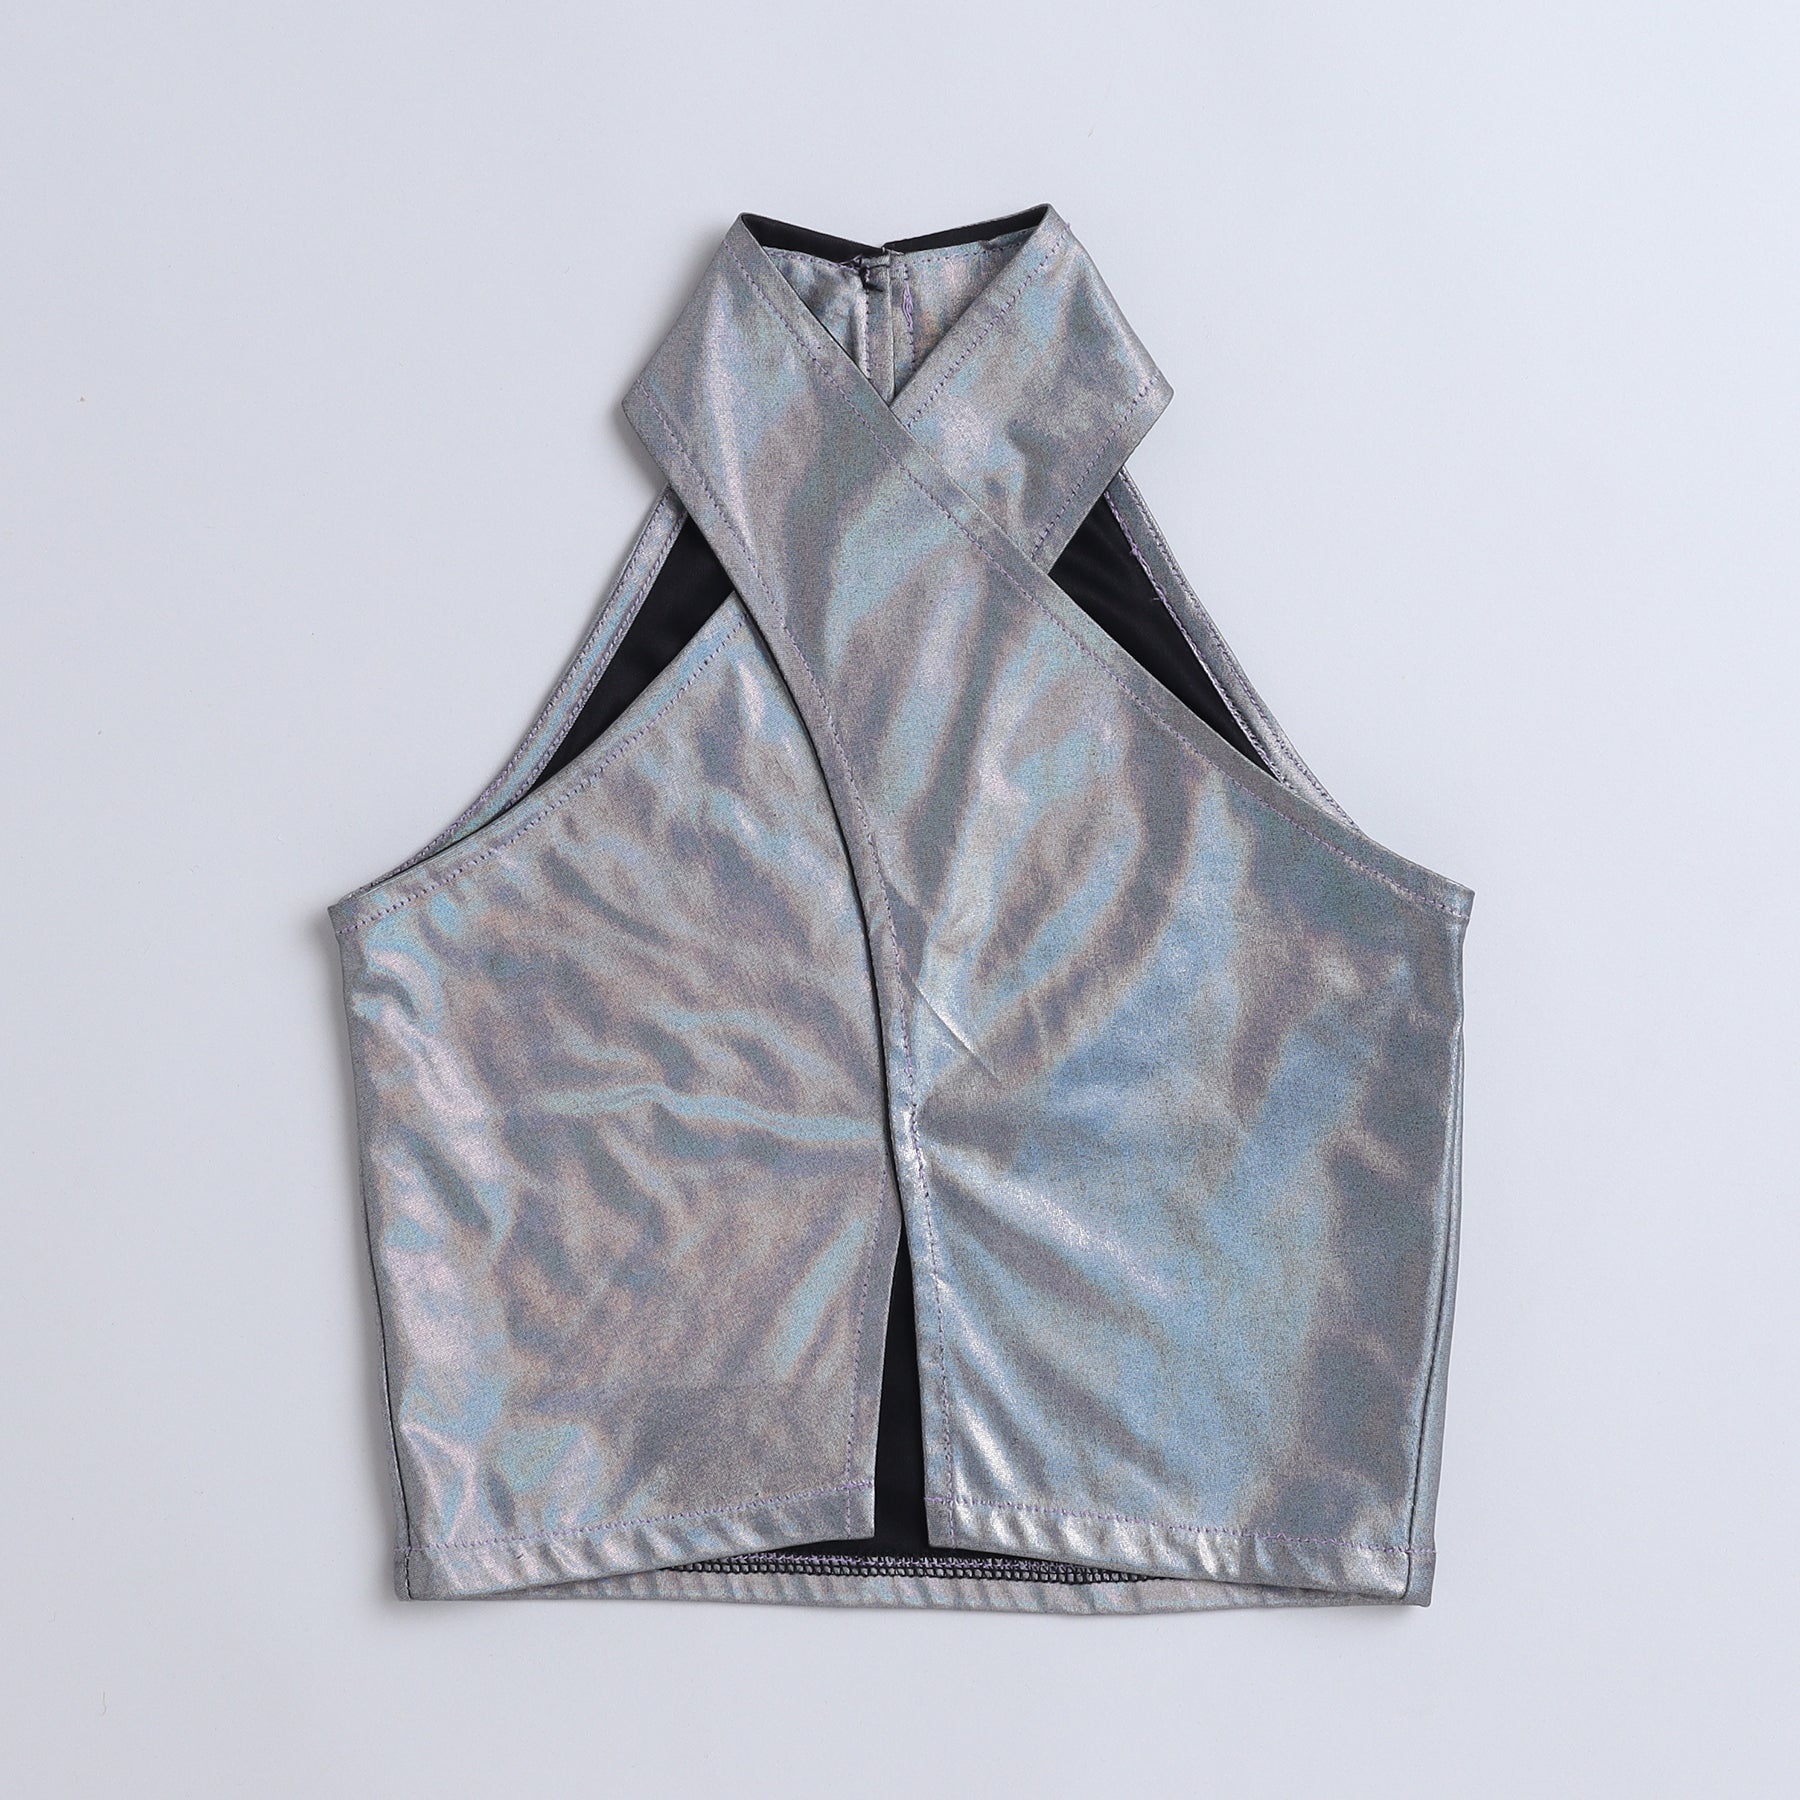 Shop Holographic Halter Neck Slit Party Top With Skirt Set-Silver/Black Online